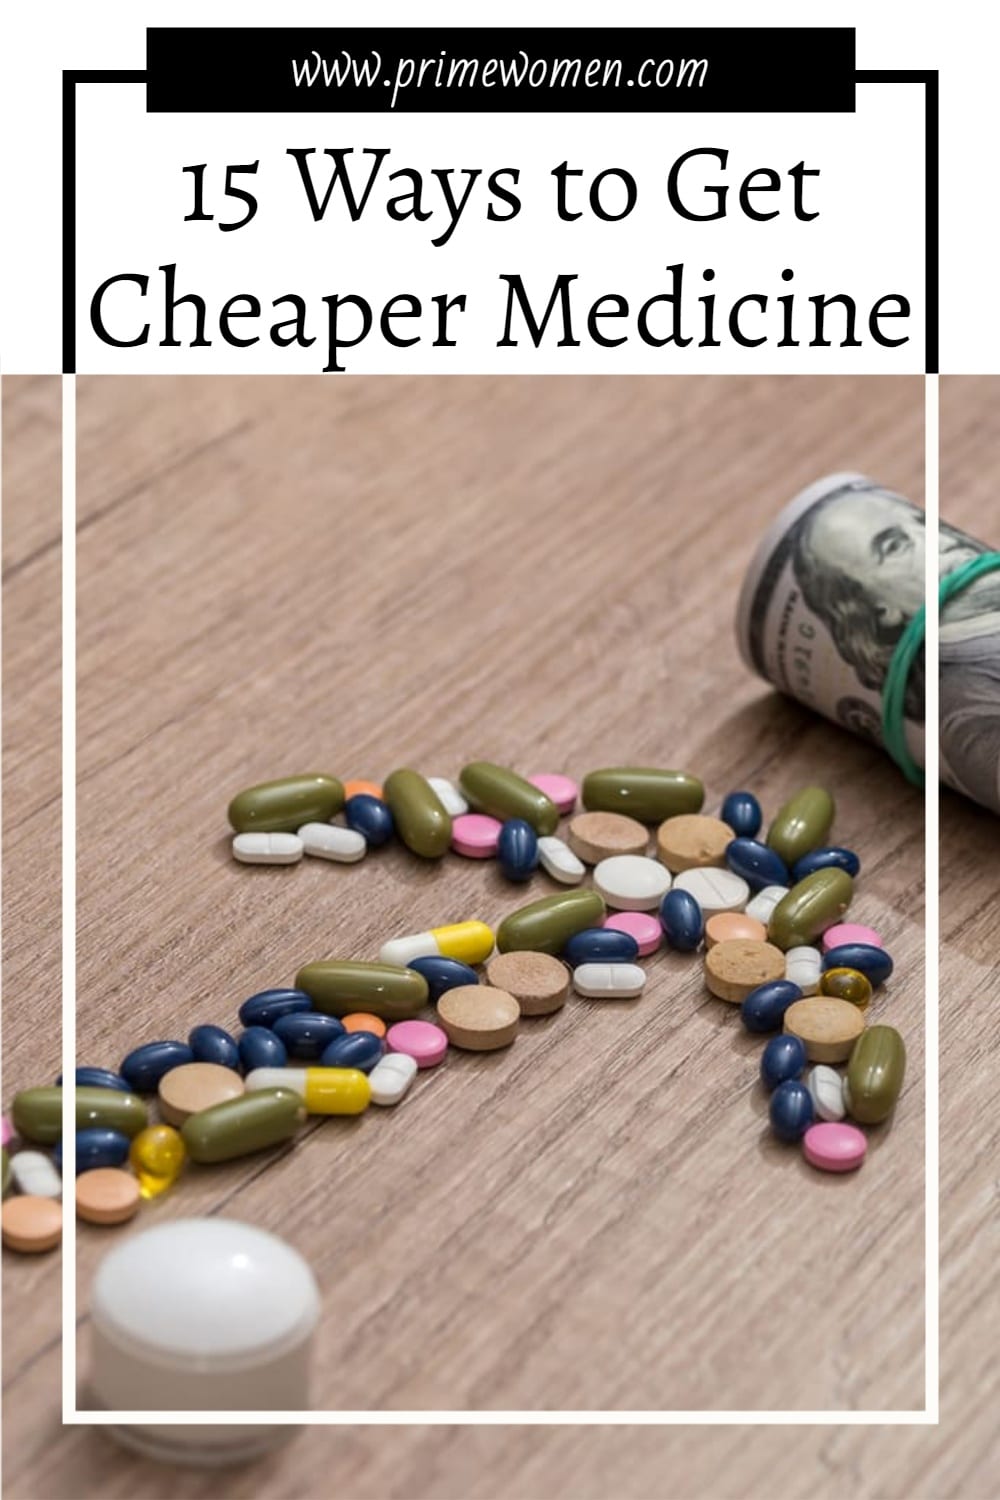 15-Ways-to-Get-Cheaper-Medicine